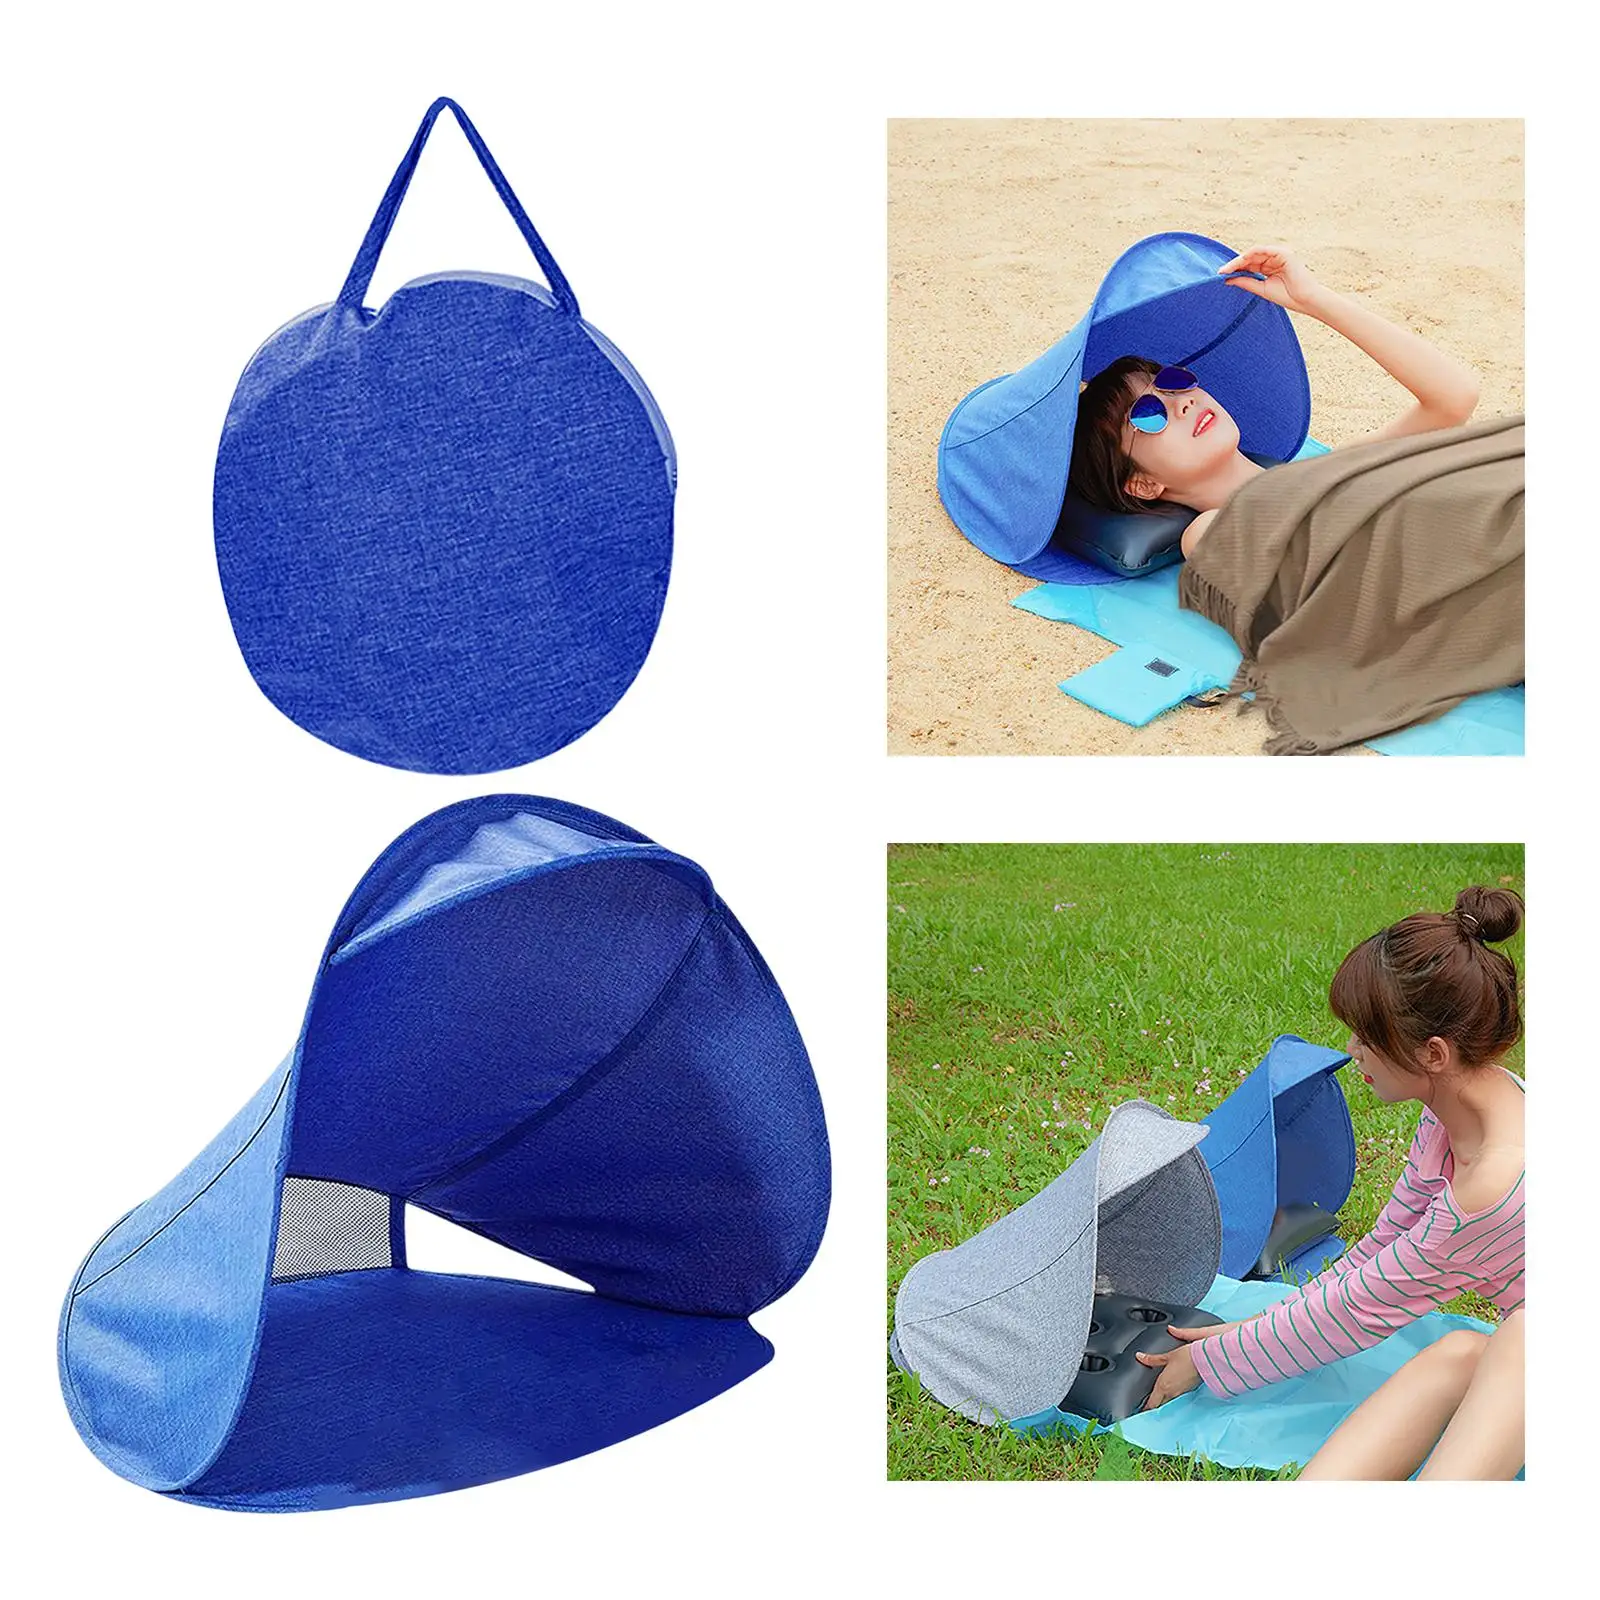   Facial Umbrellas Breathable Head Tent for Outdoor Camping Picnic